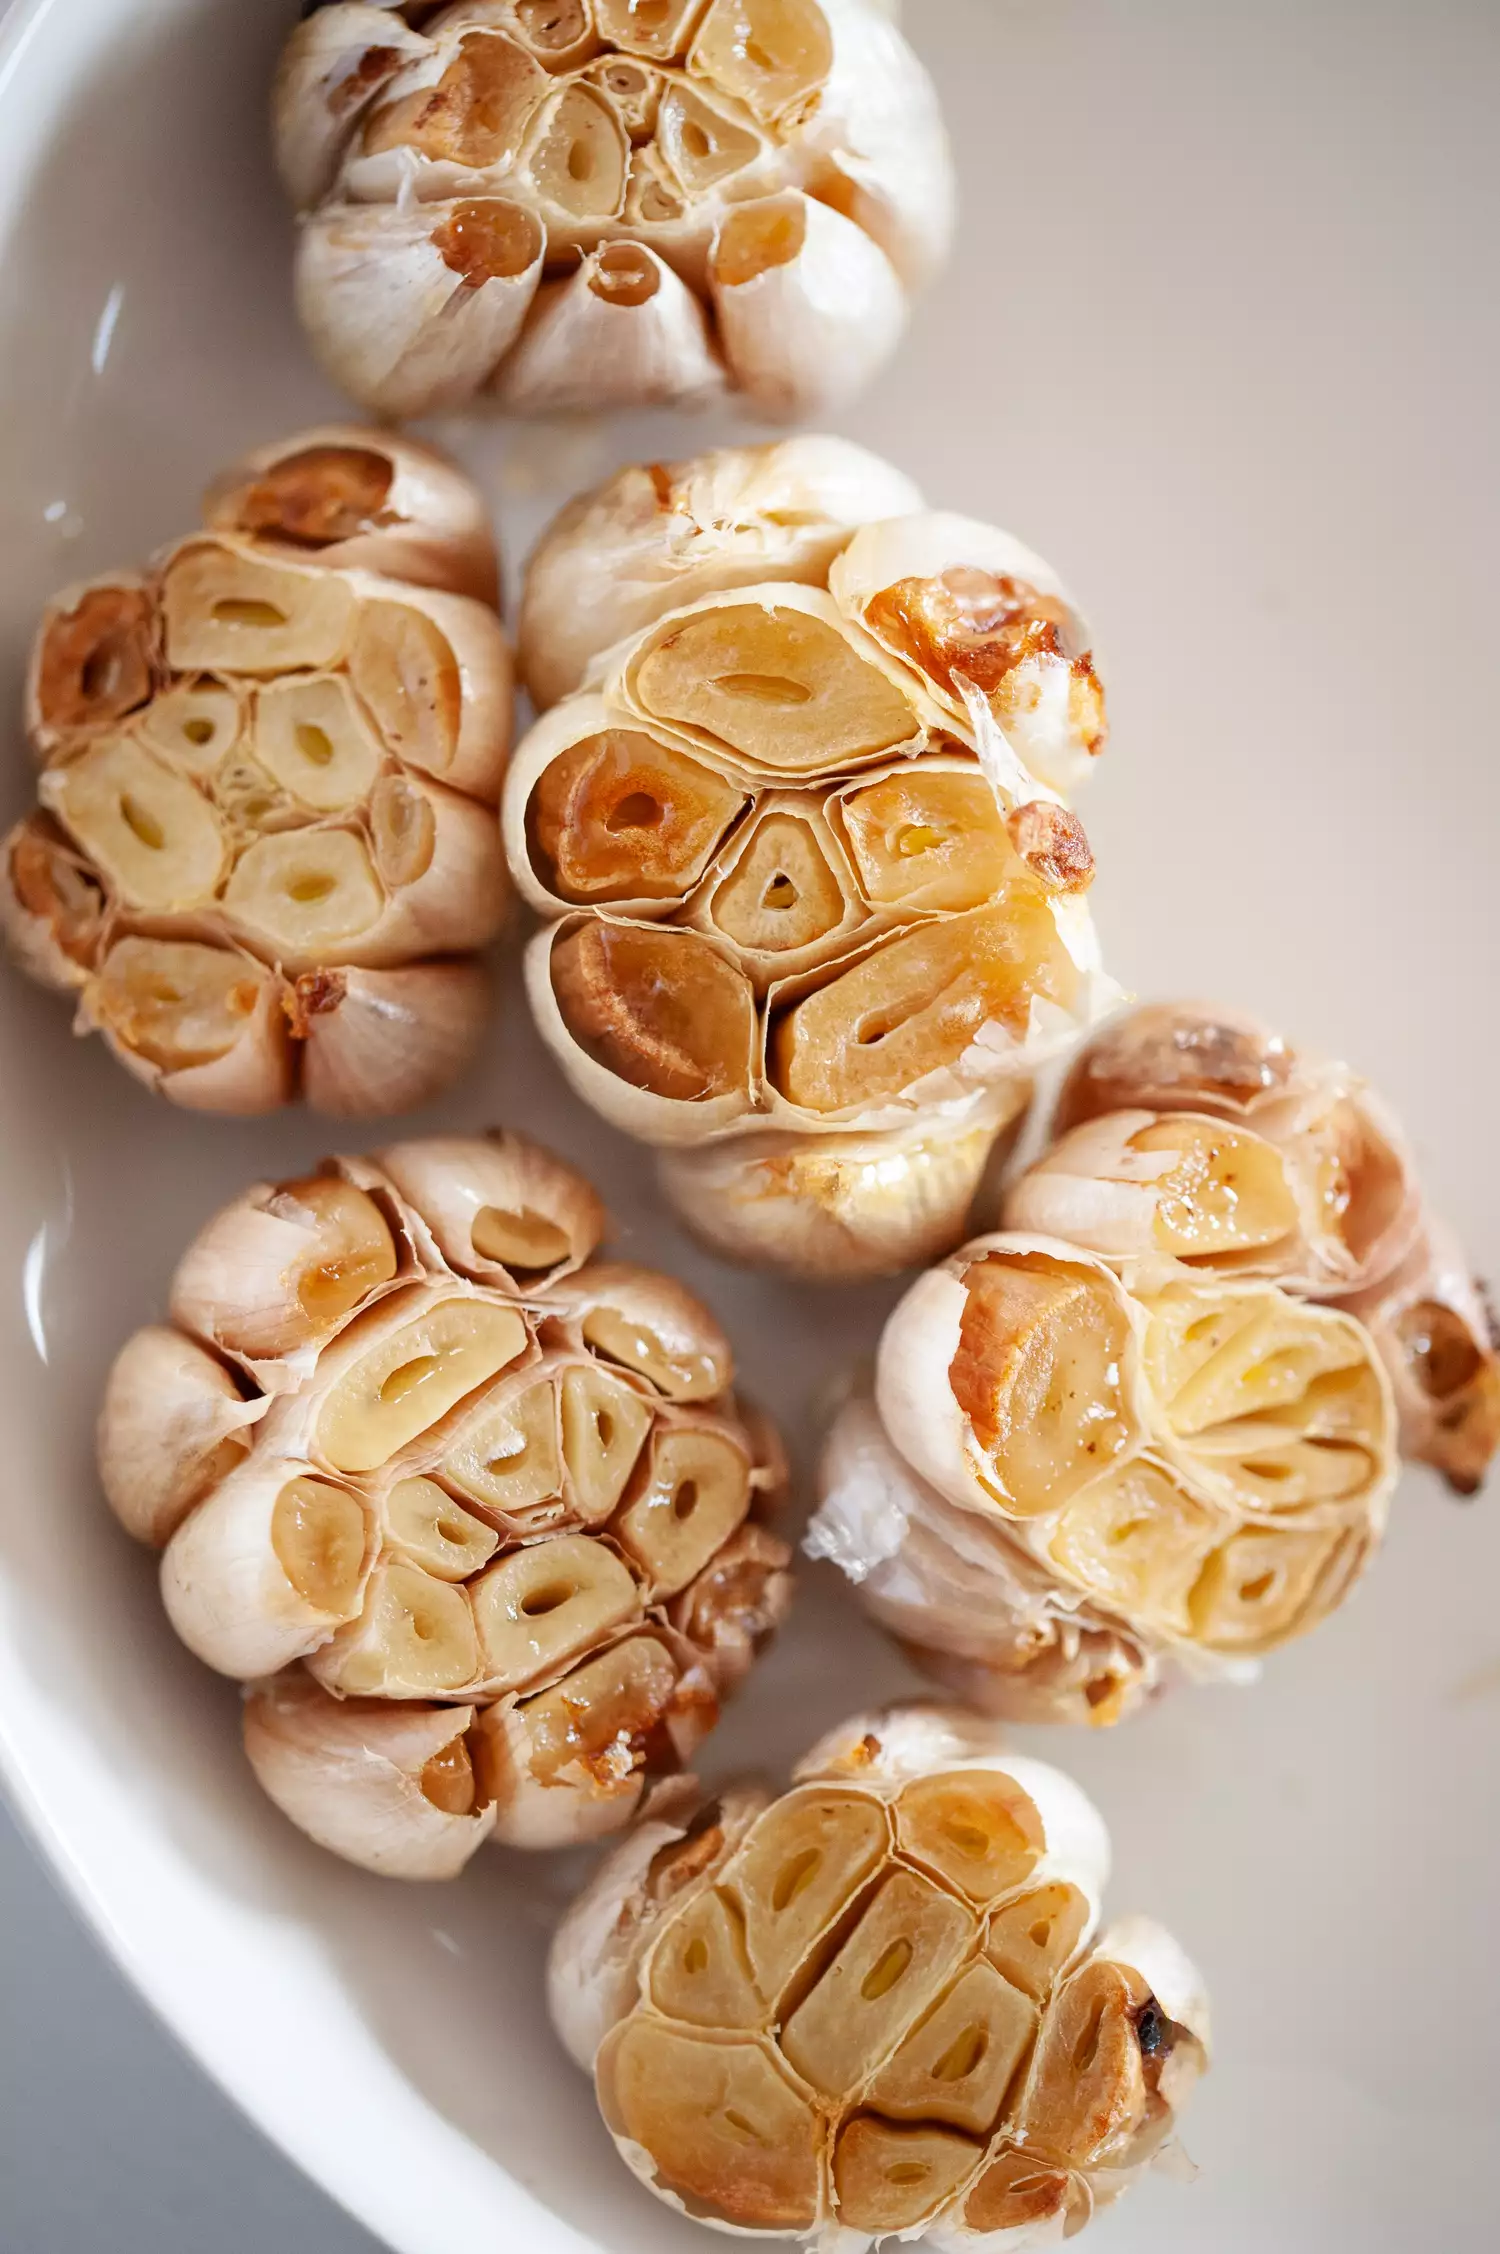 Roasted Garlic